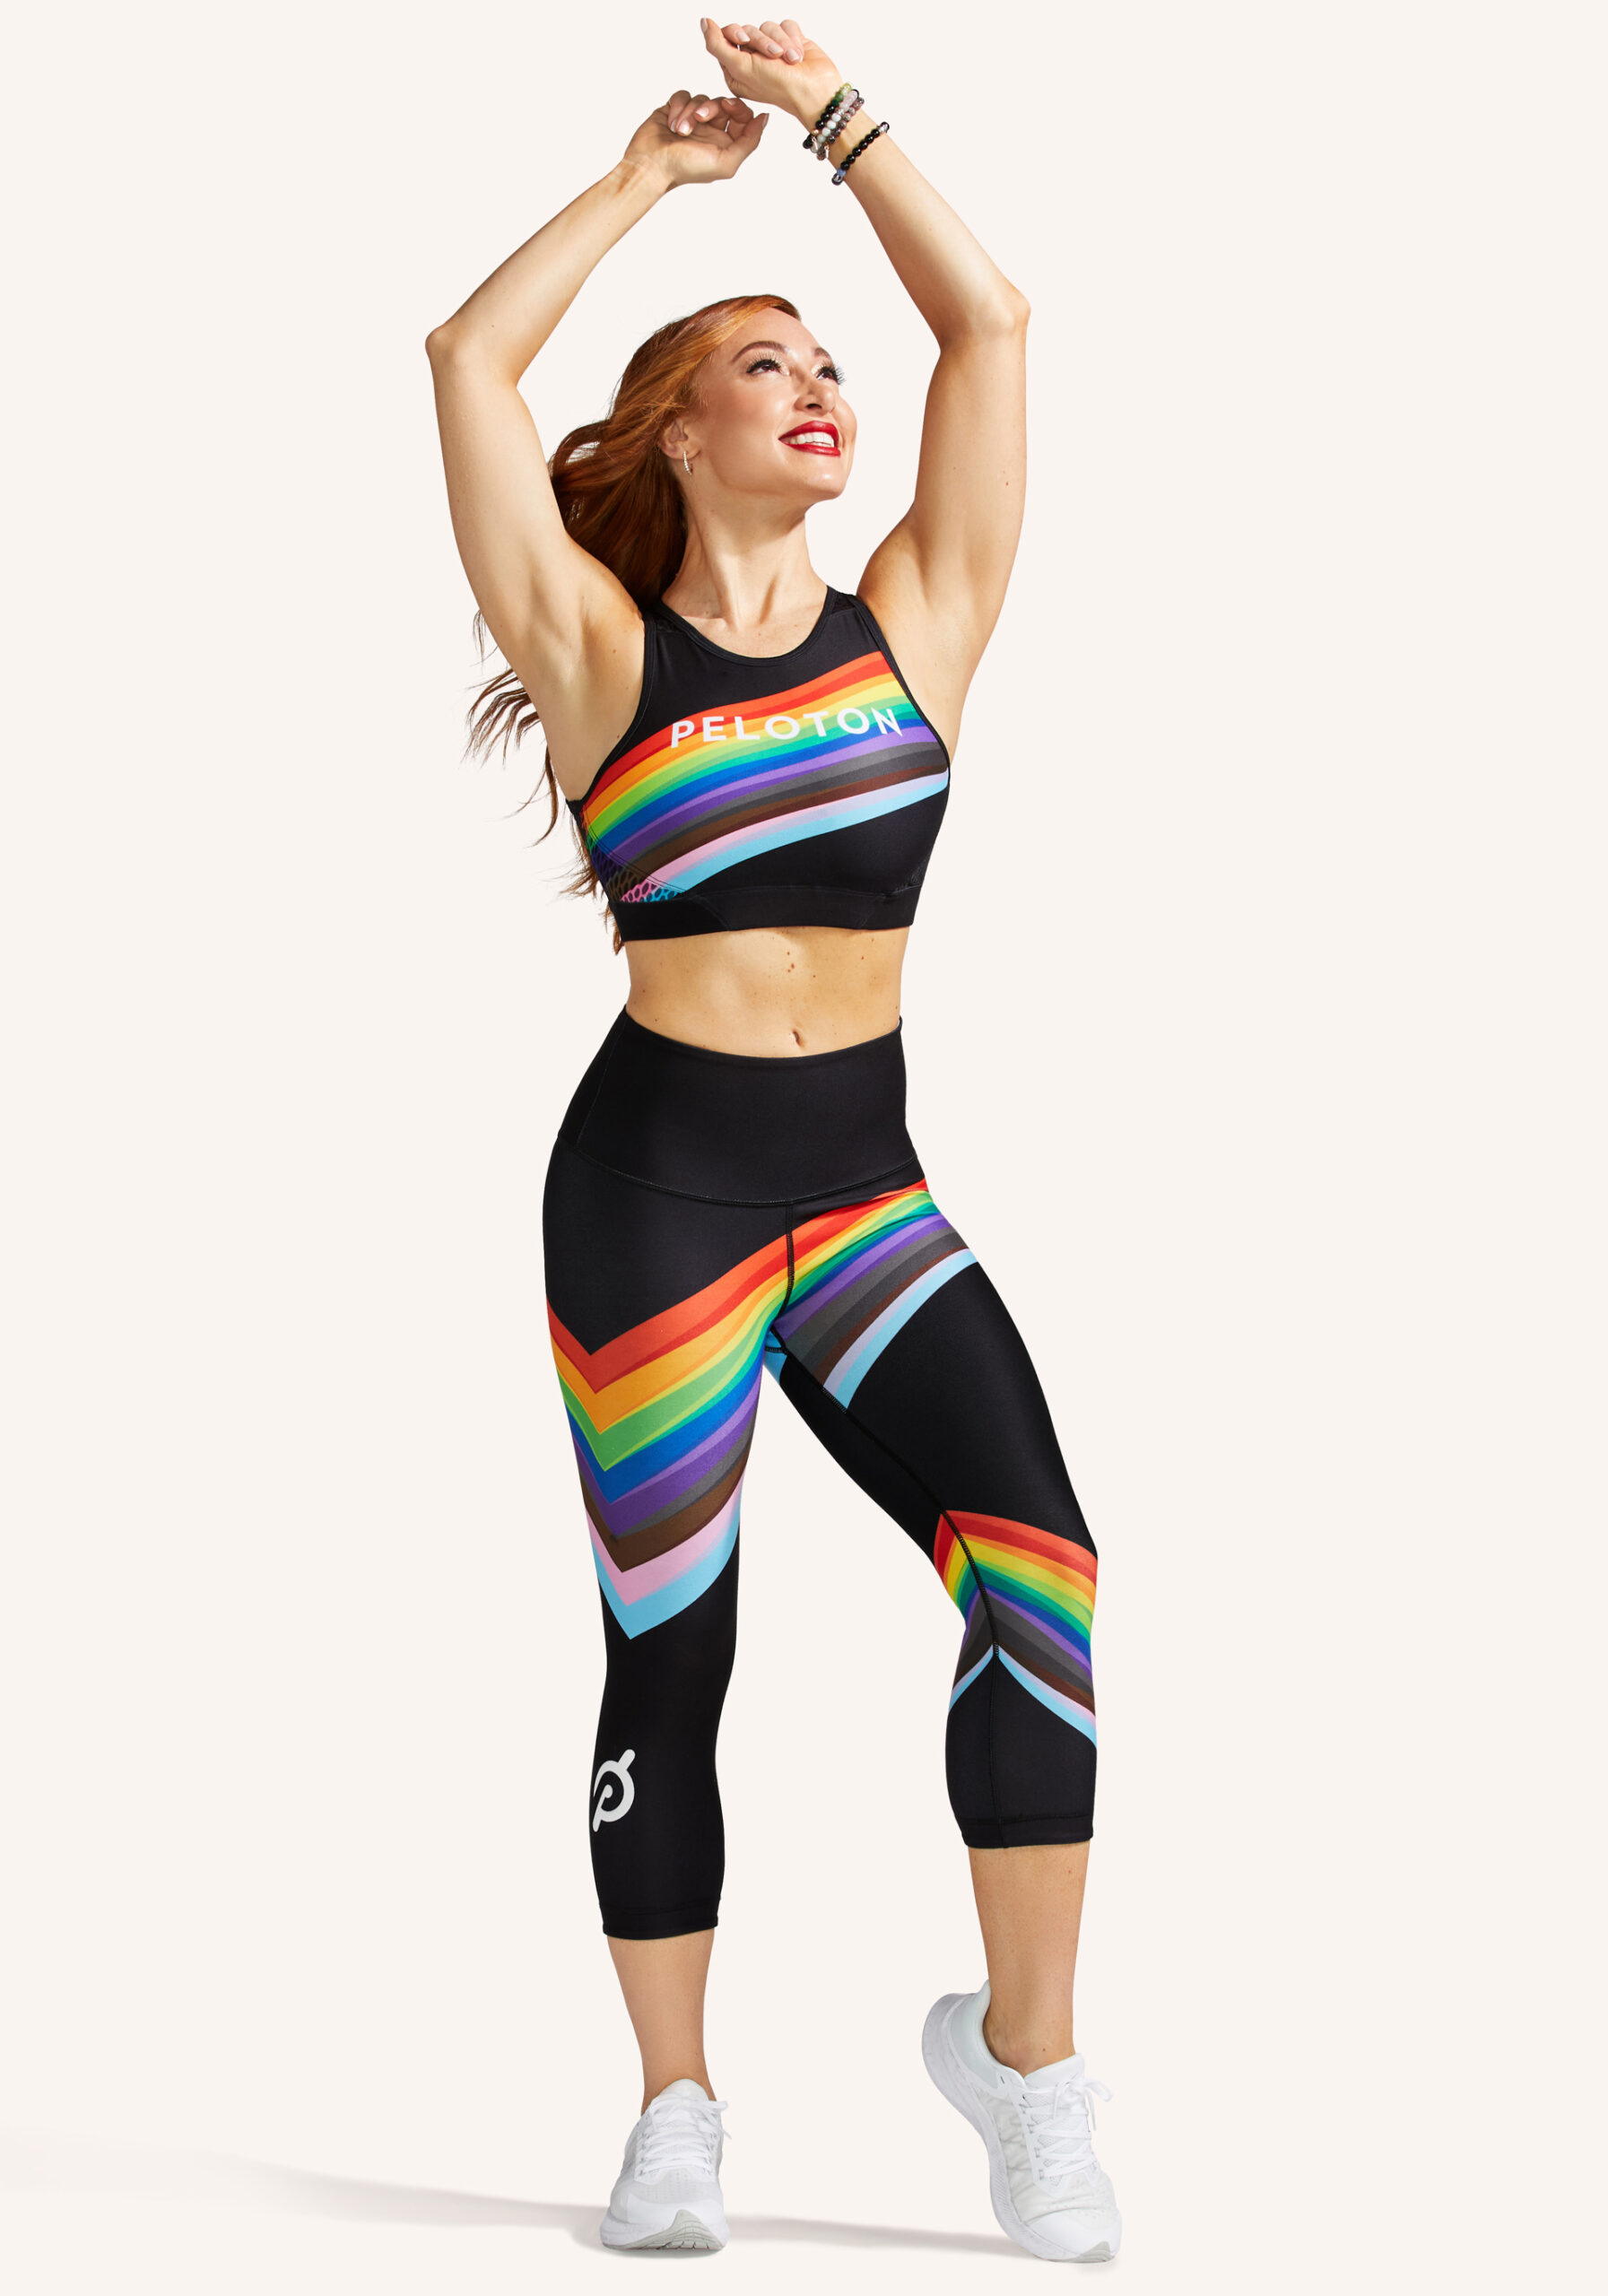 WITH Peloton Multicolor Composite Bra and Reversible leggings